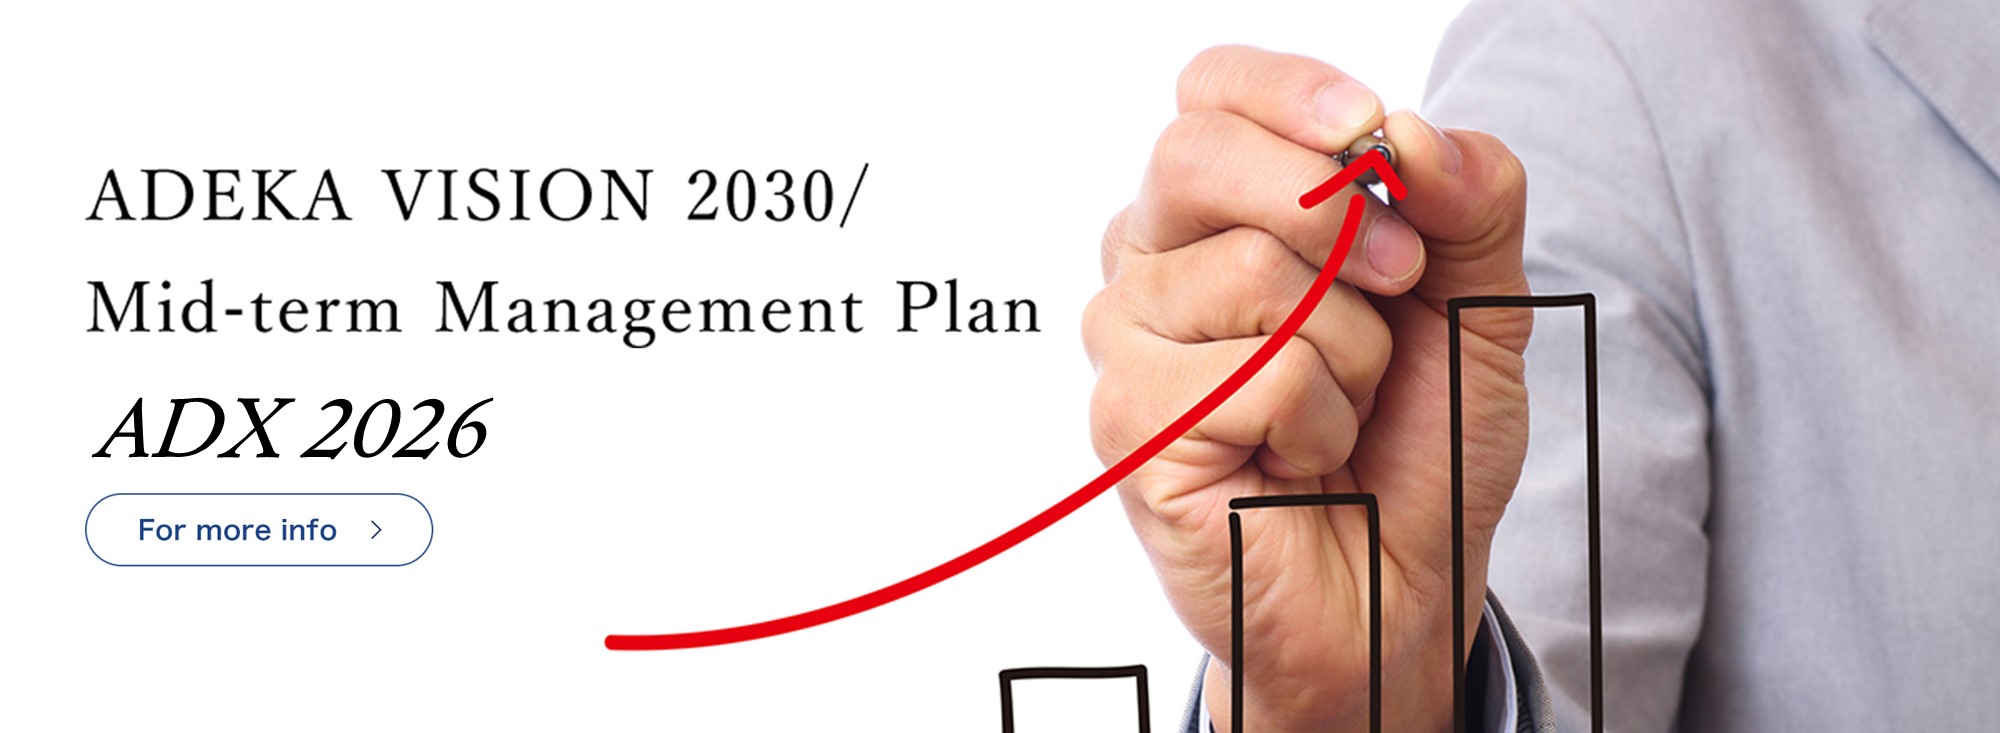 ADEKA VISION 2030/Mid-term Management Plan ADX 2023